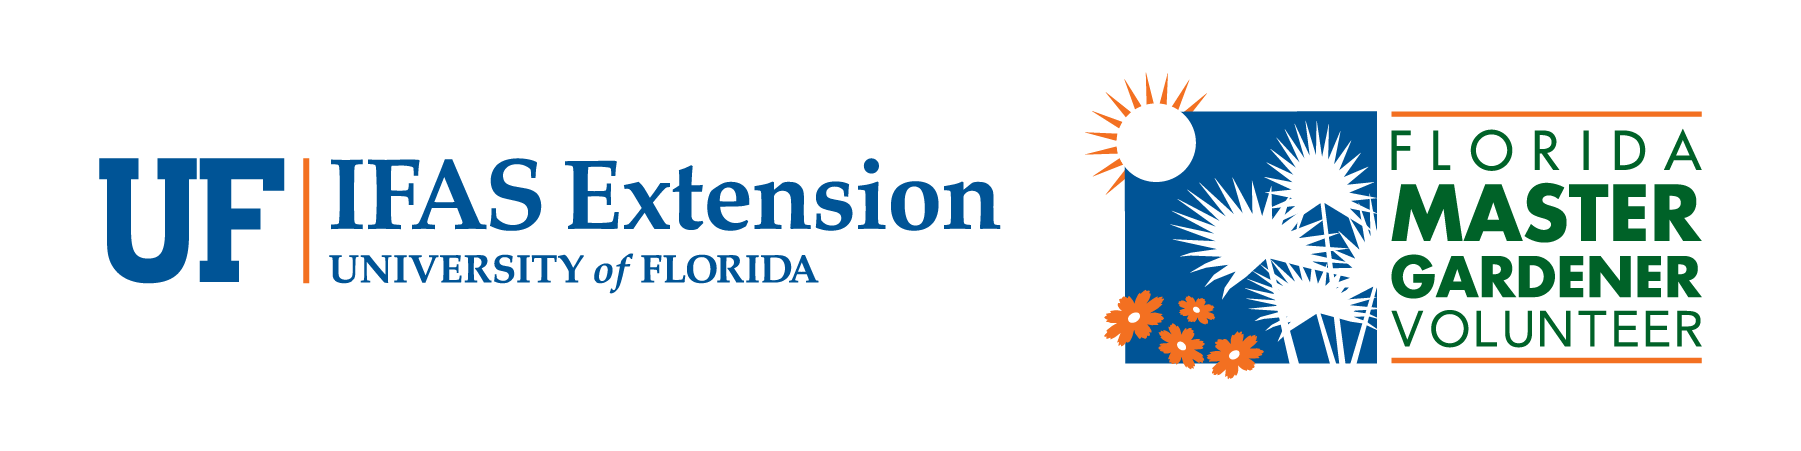 Gardener Logo - Florida Master Gardener Volunteer Program Logos